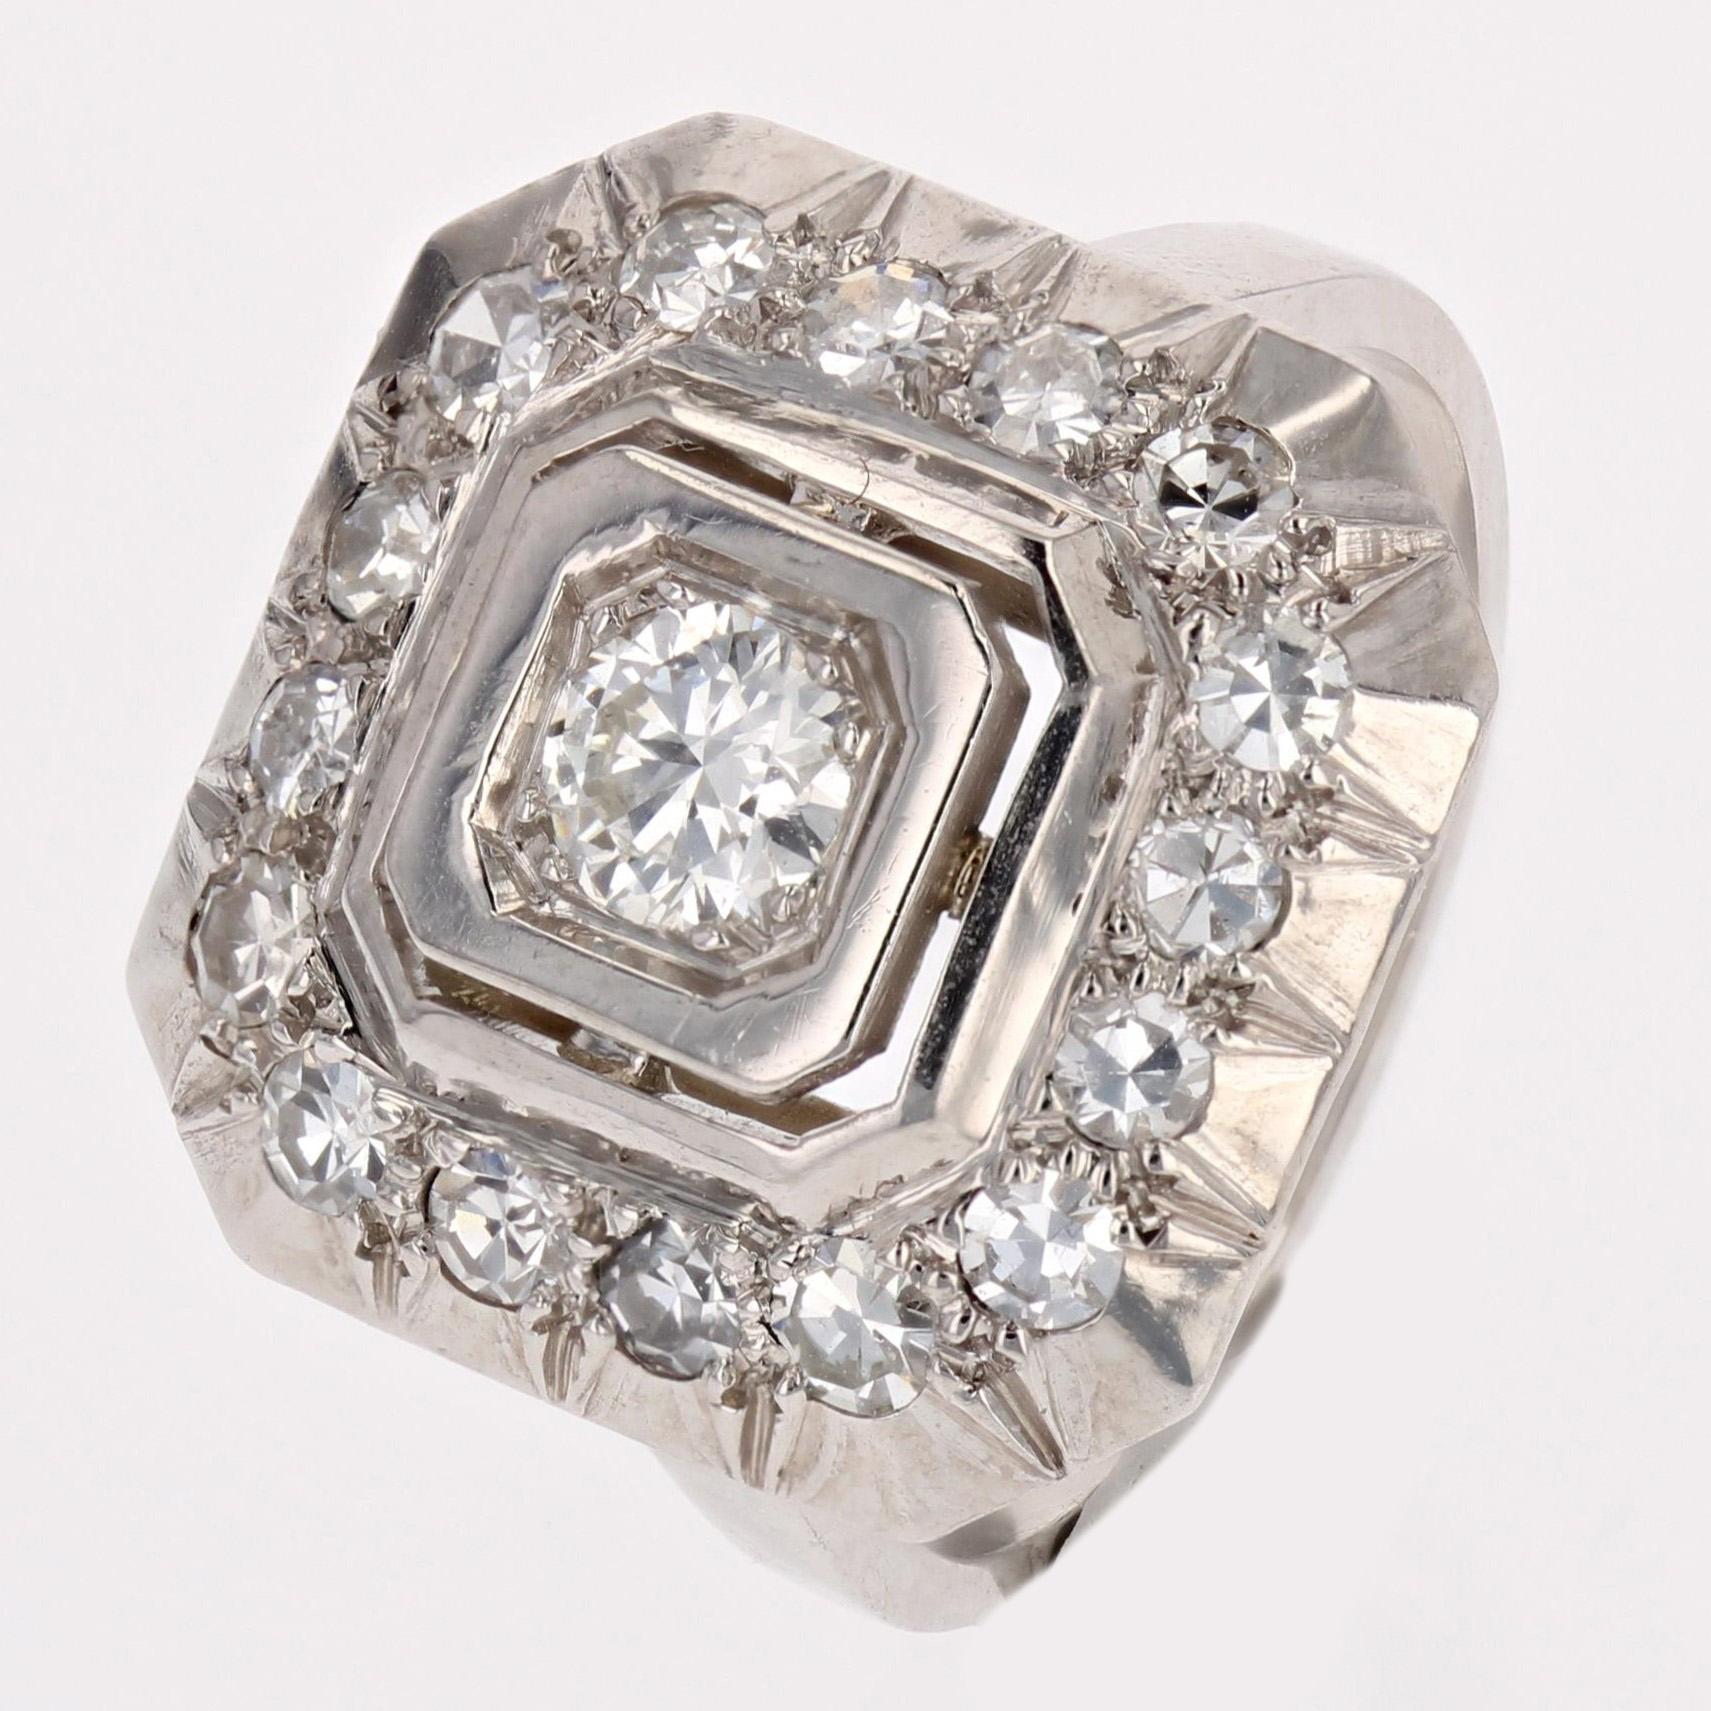 1930s Art Deco 18 Karat White Gold Diamond Squarred Ring For Sale 4